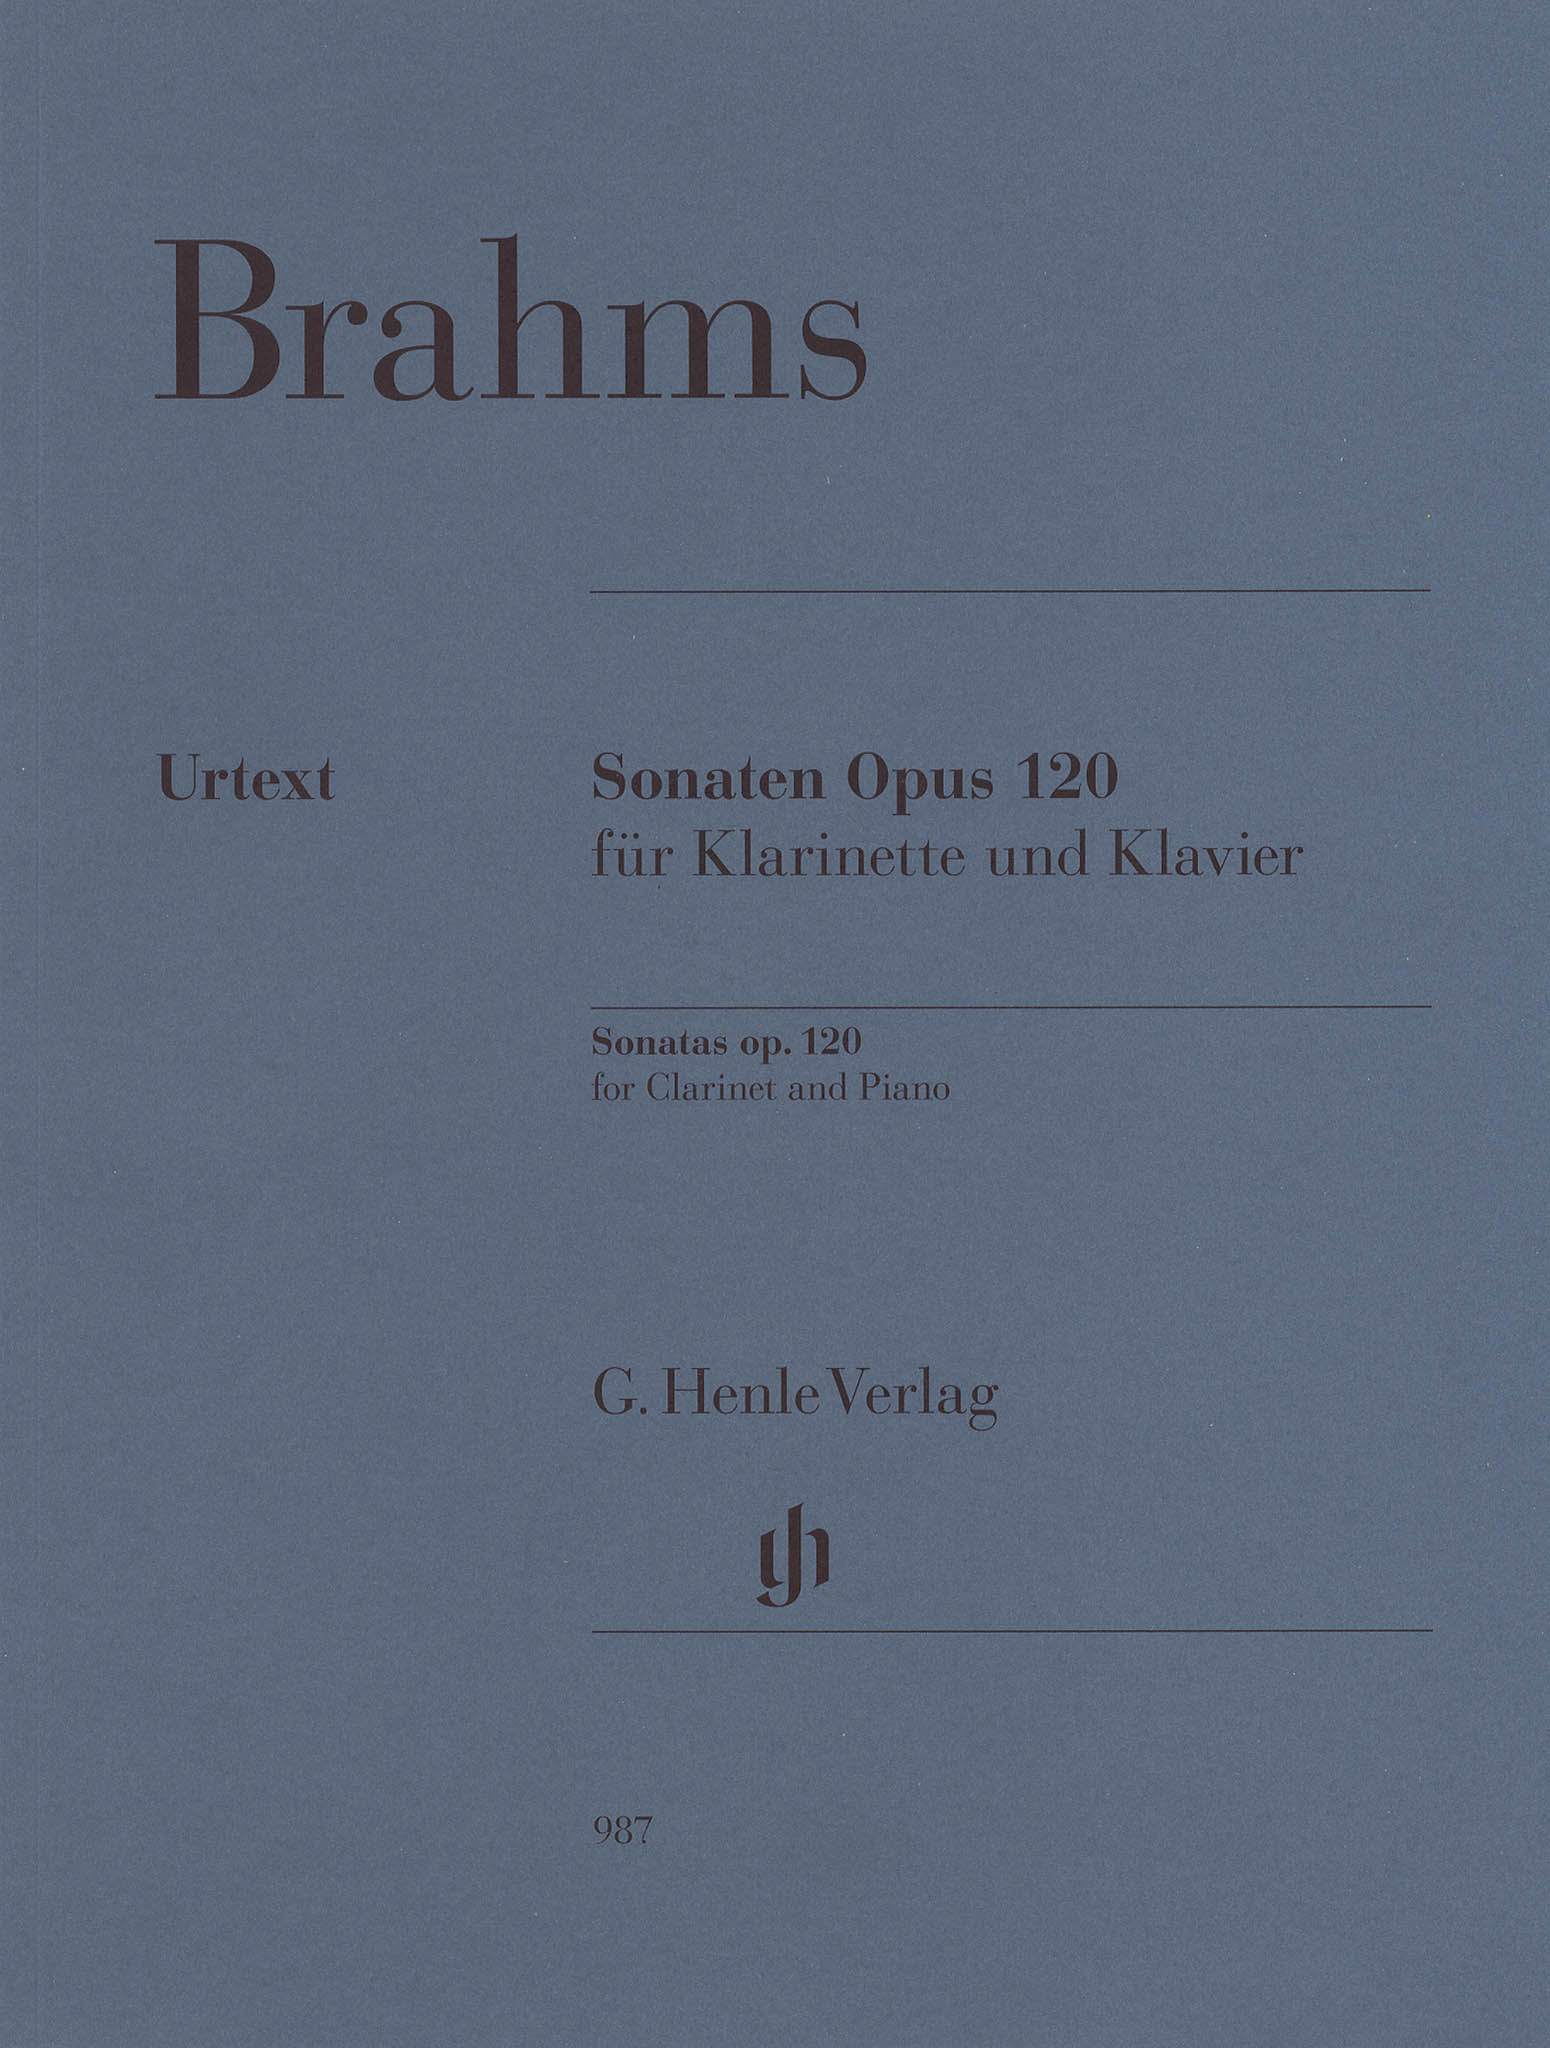 Sonata in E-flat Major, Op. 120 No. 2 Cover